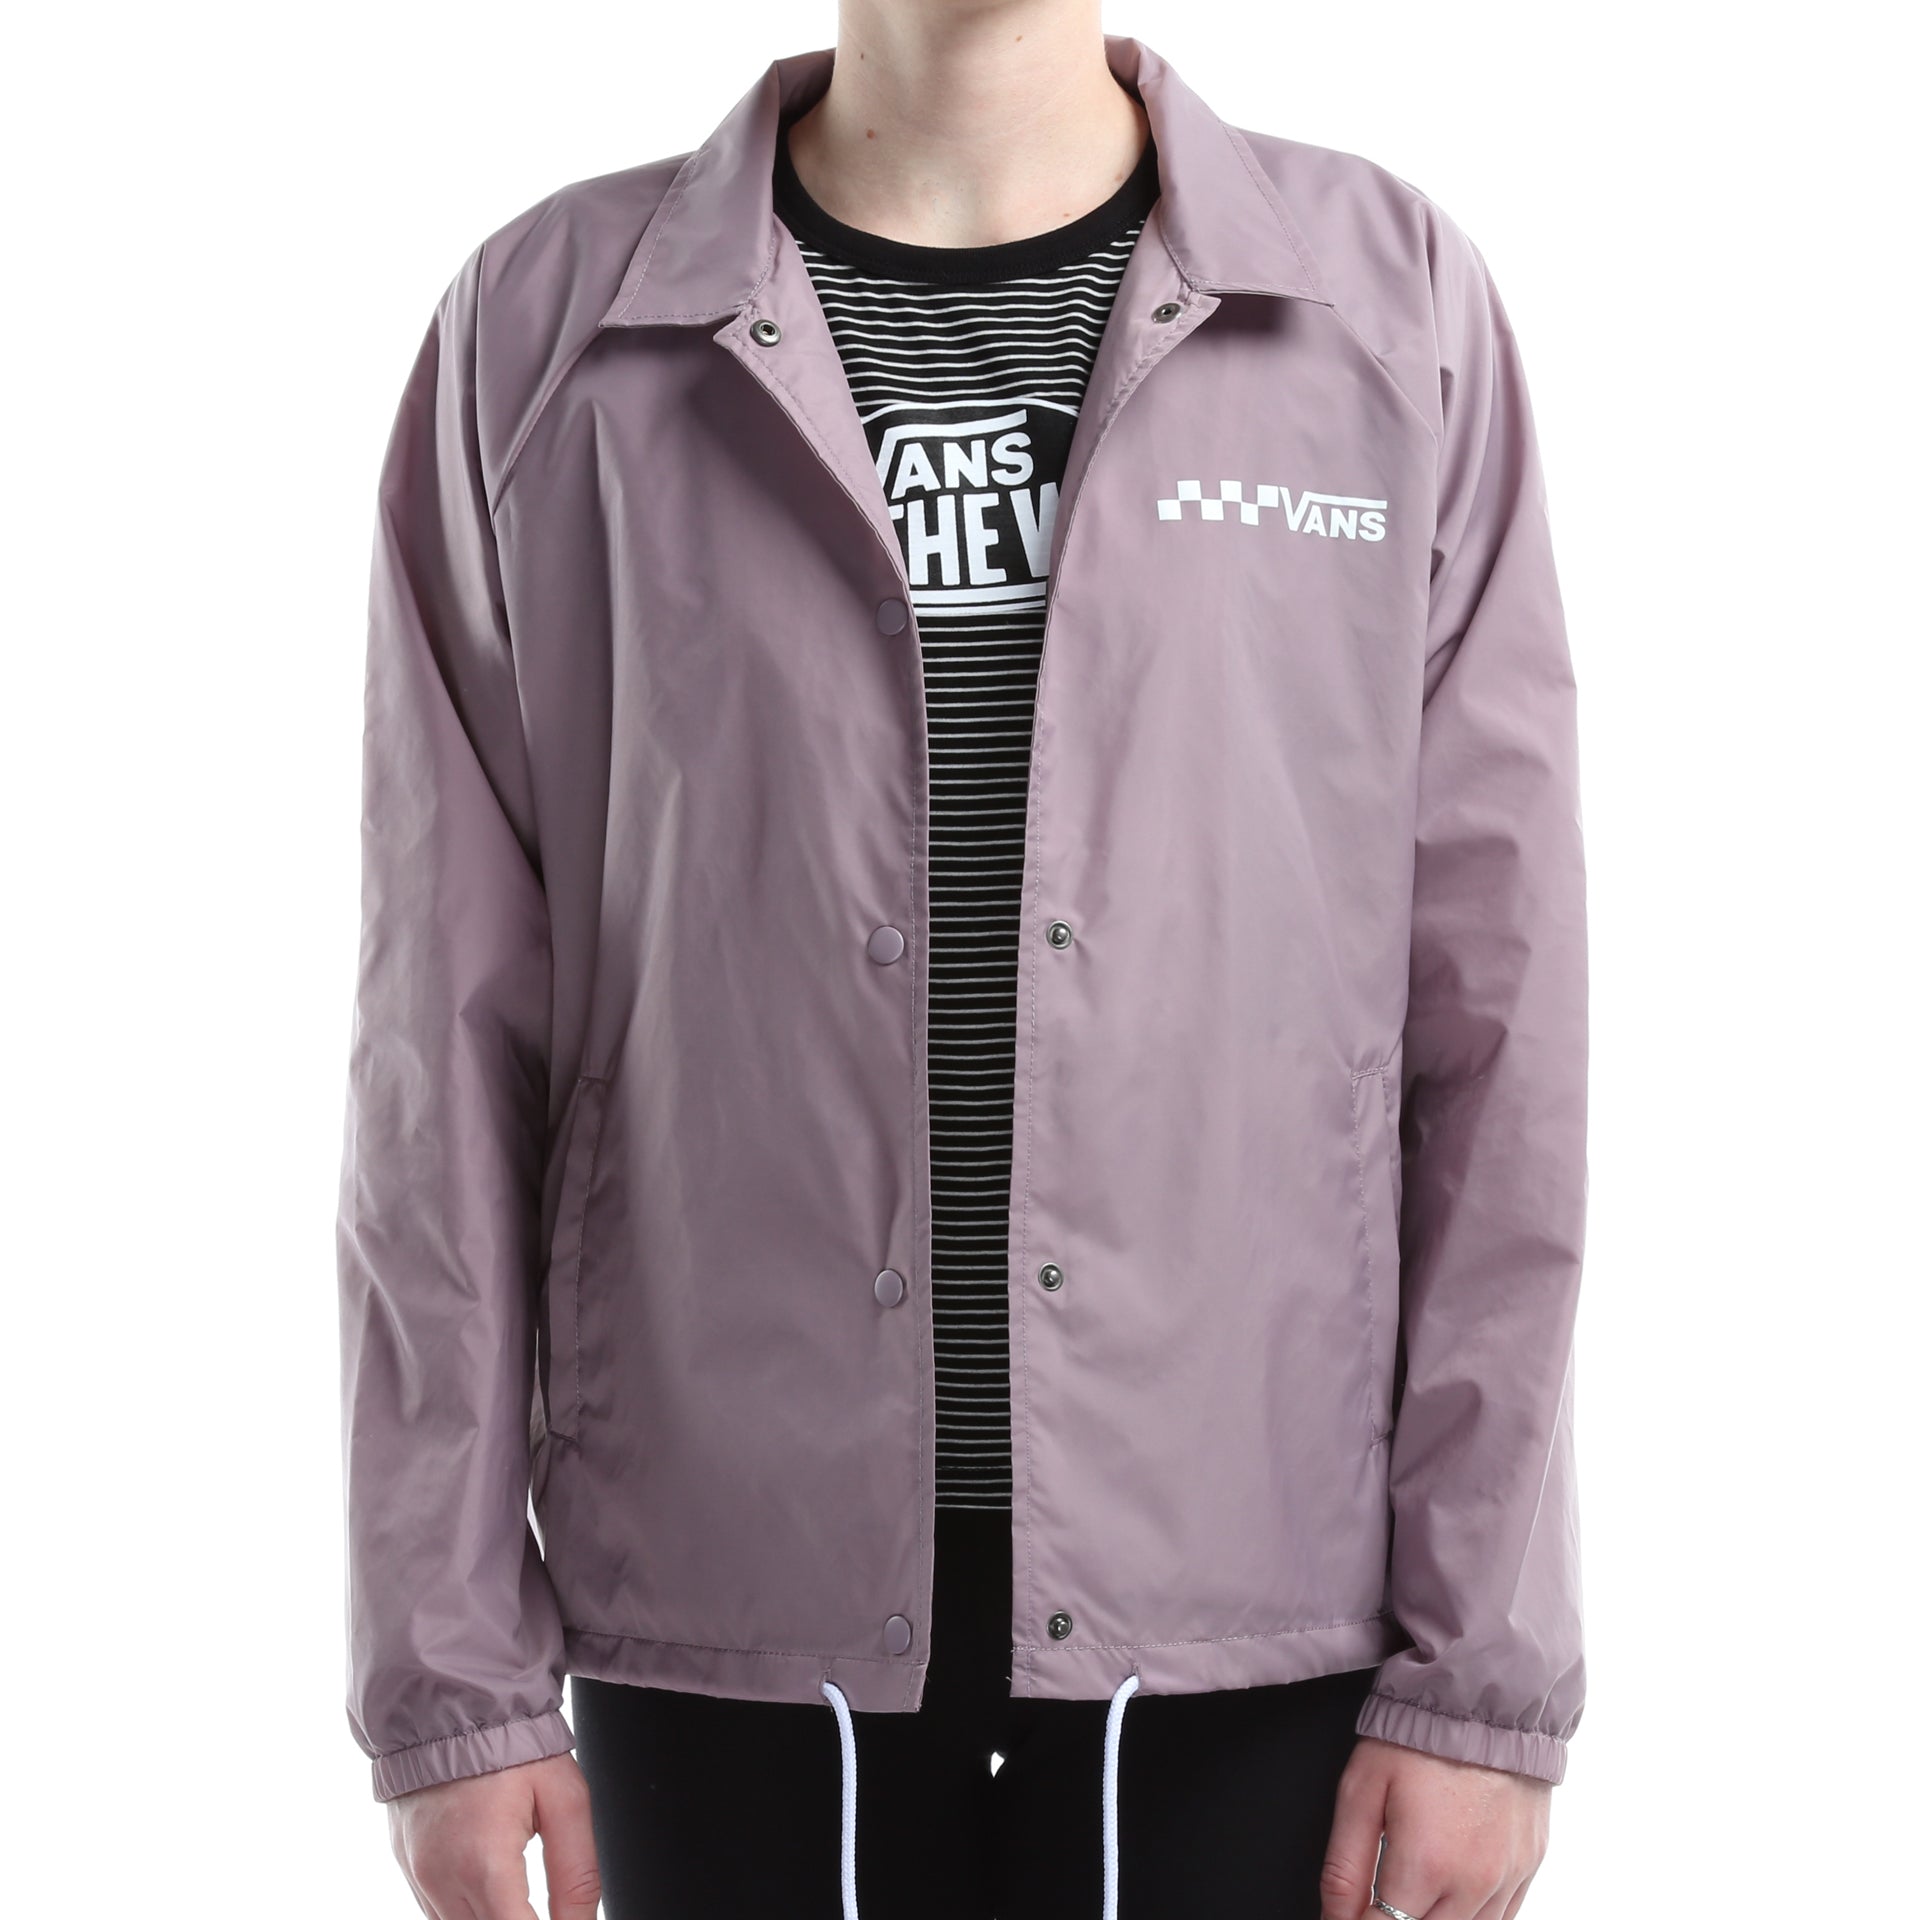 vans jacket for womens